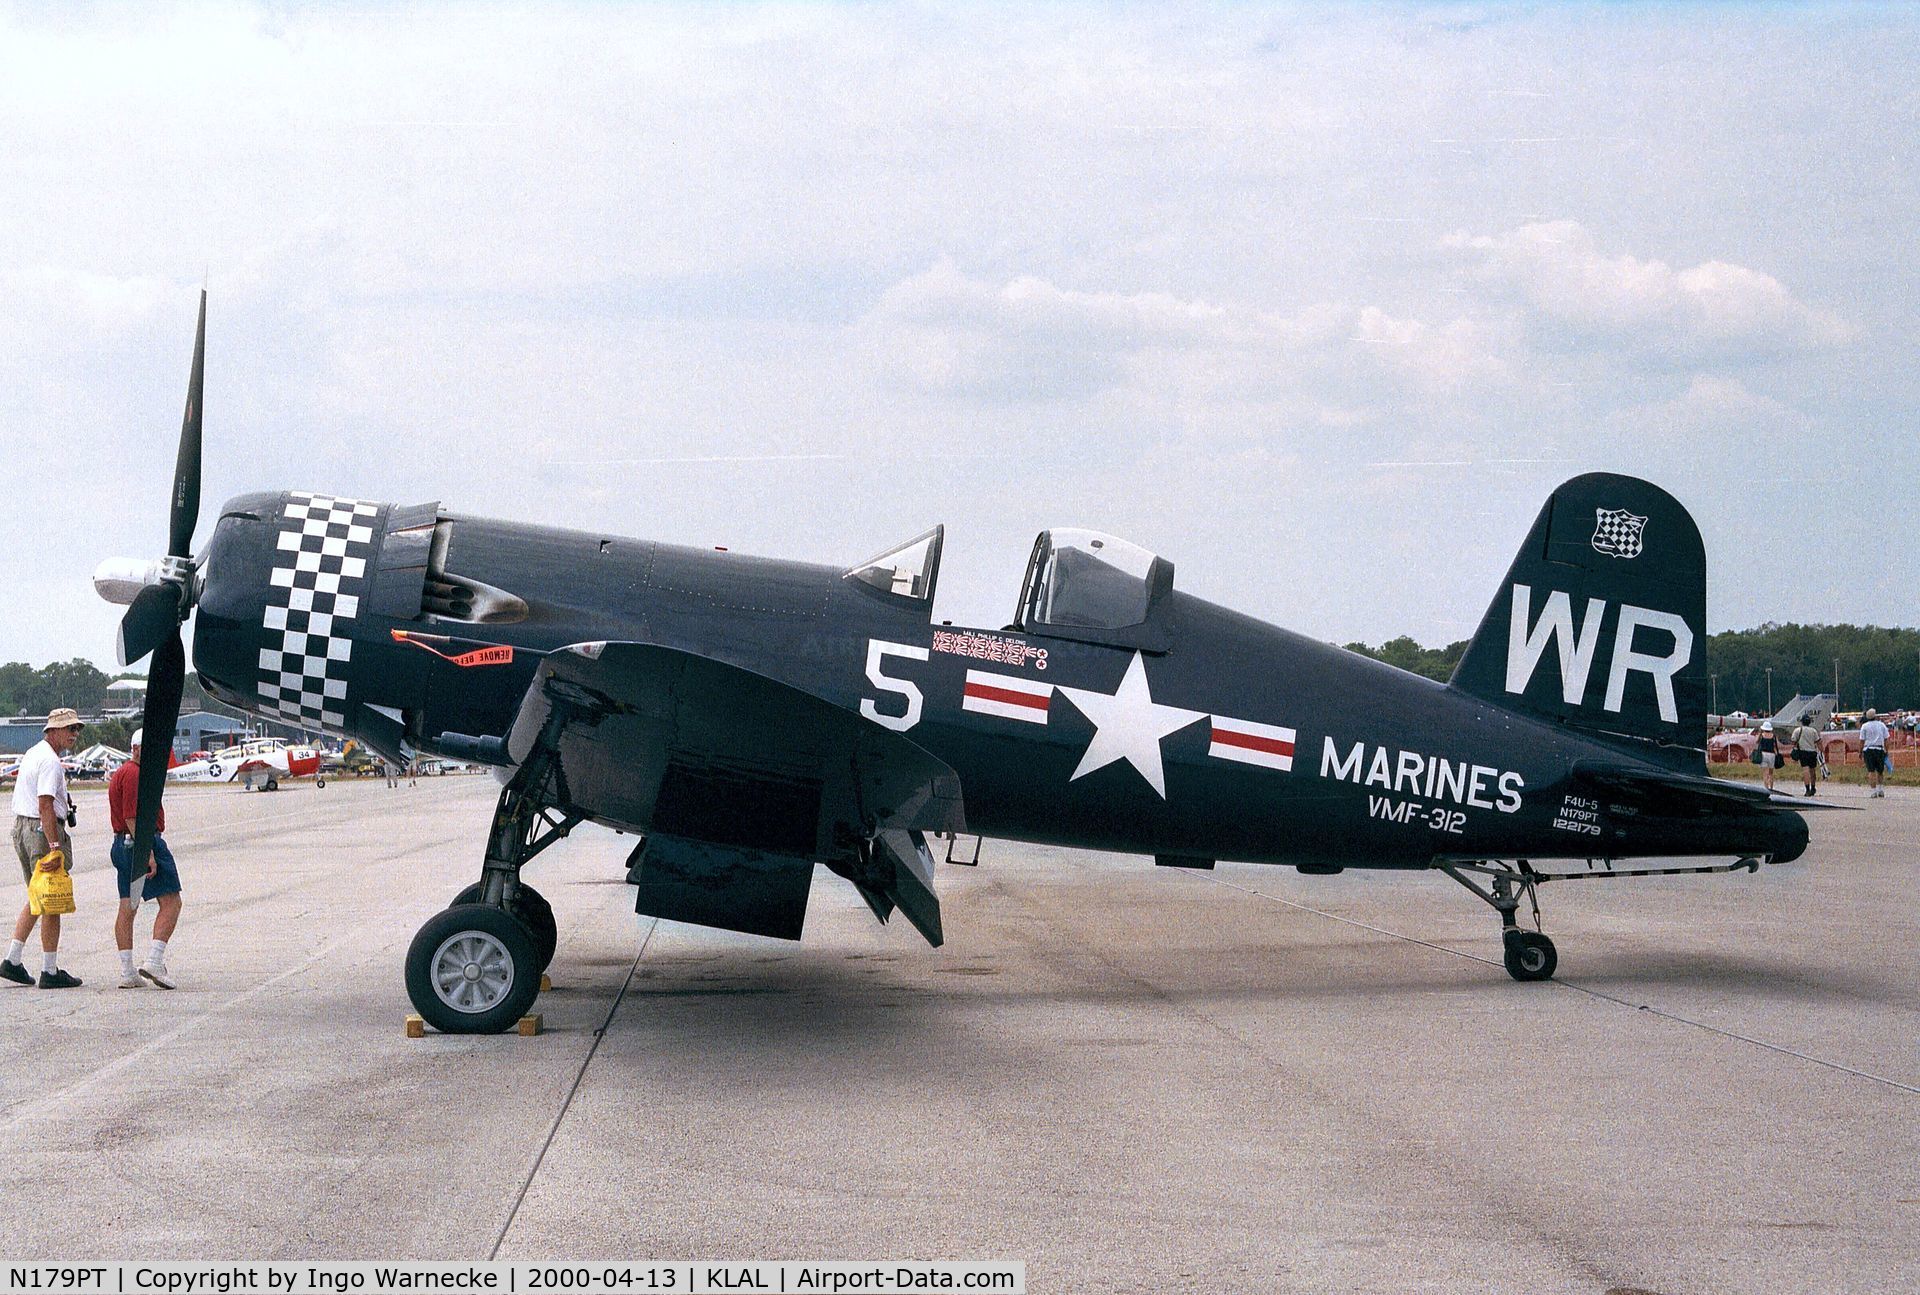 N179PT, 1948 Vought F4U-5 Corsair C/N Not found (Bu122179), Chance Vought F4U-5 Corsair at 2000 Sun 'n Fun, Lakeland FL